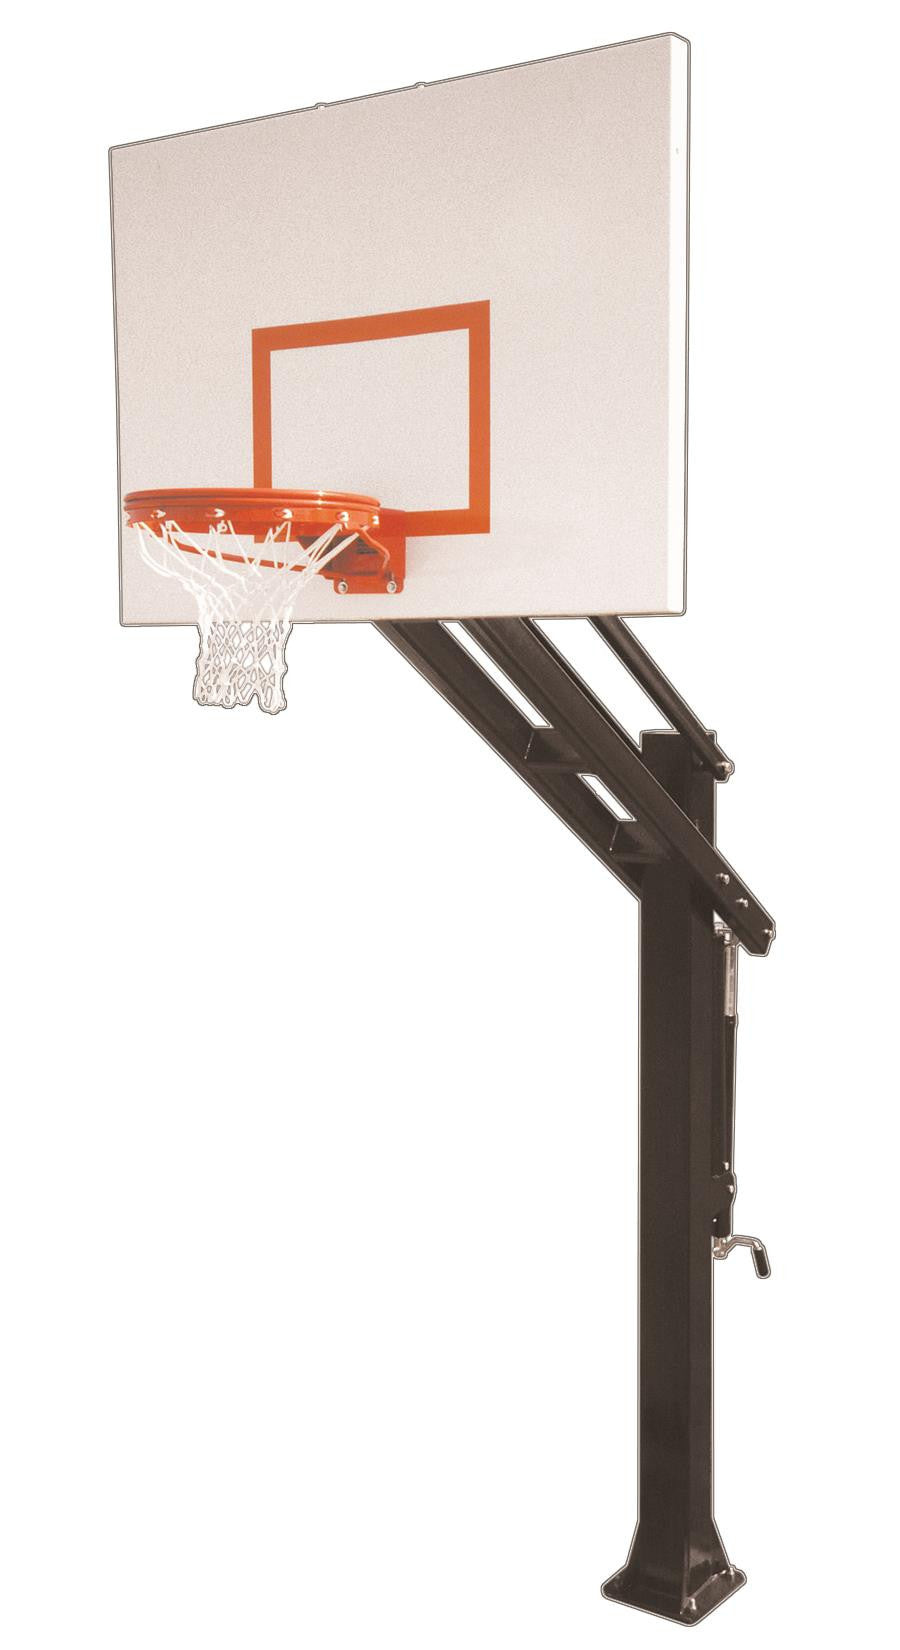 First Team Titan Impervia In Ground Outdoor Adjustable Basketball Hoop 60 inch Aluminum